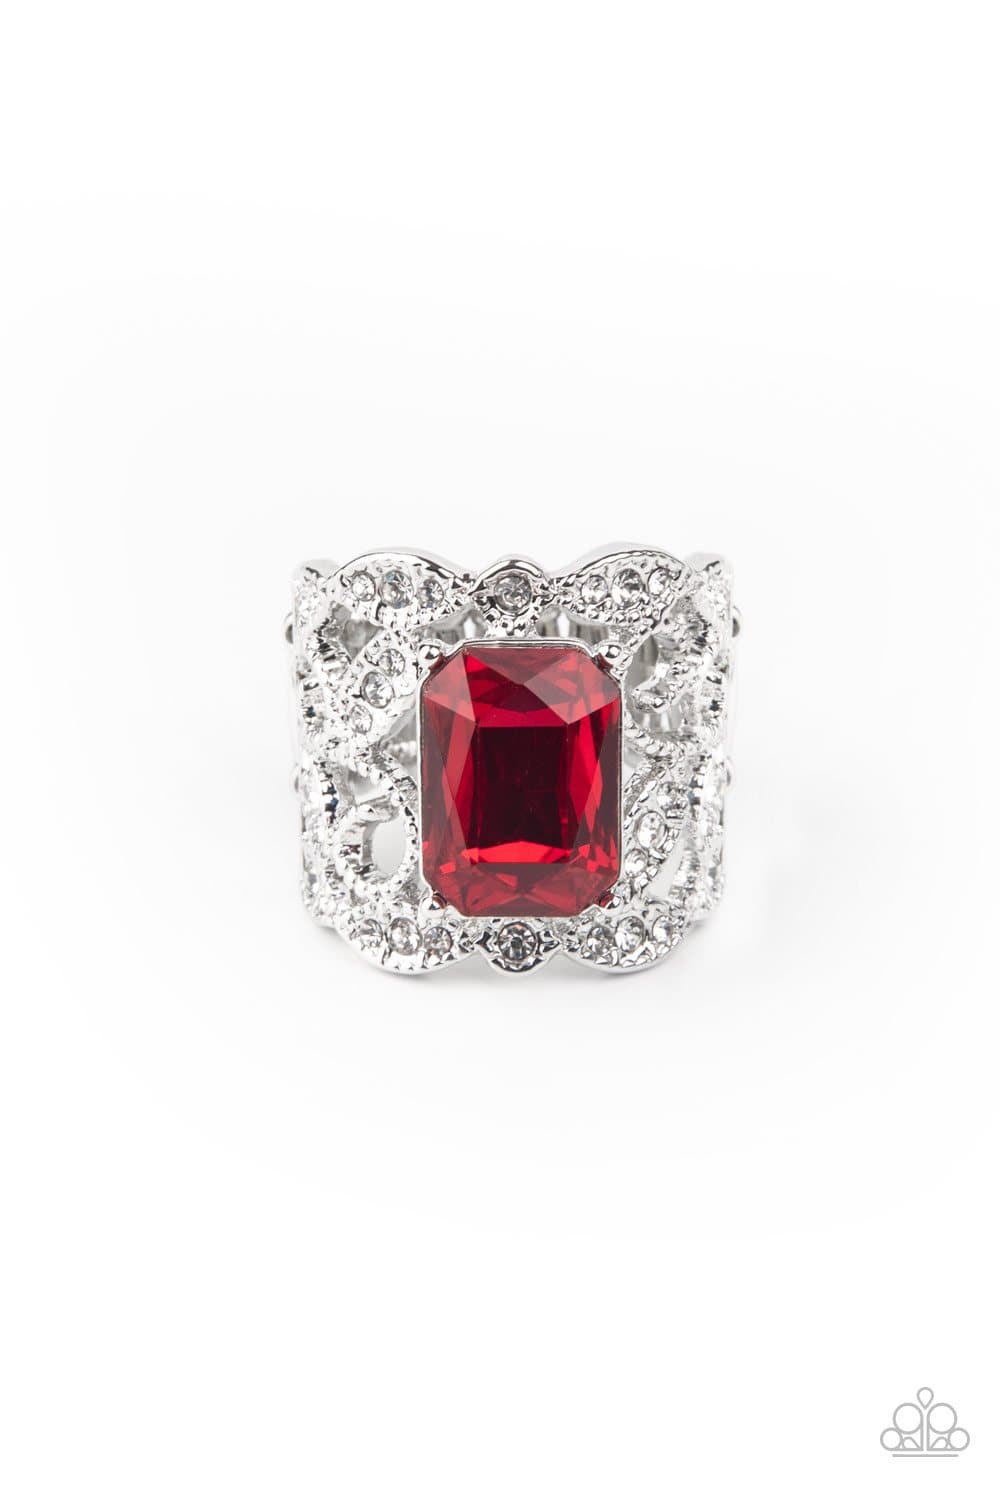 Making GLEAMS Come True - Red Rhinestone Ring - Paparazzi Accessories - GlaMarous Titi Jewels